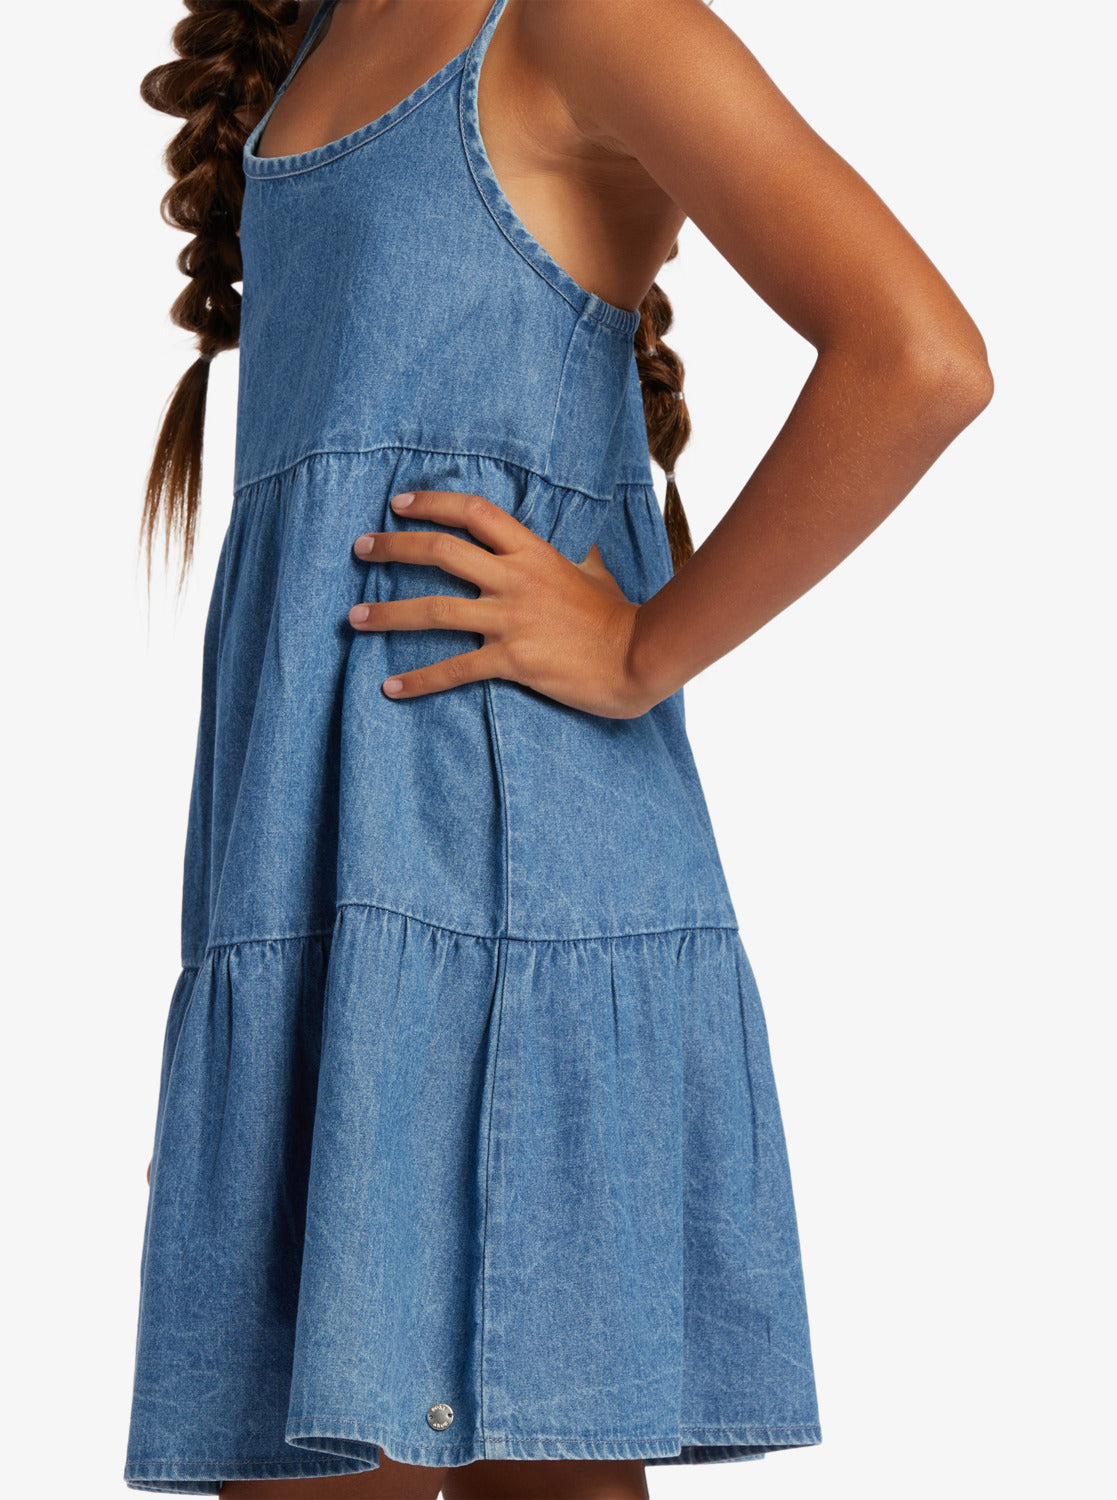 Cool For The Summer Mini Dress For Girls